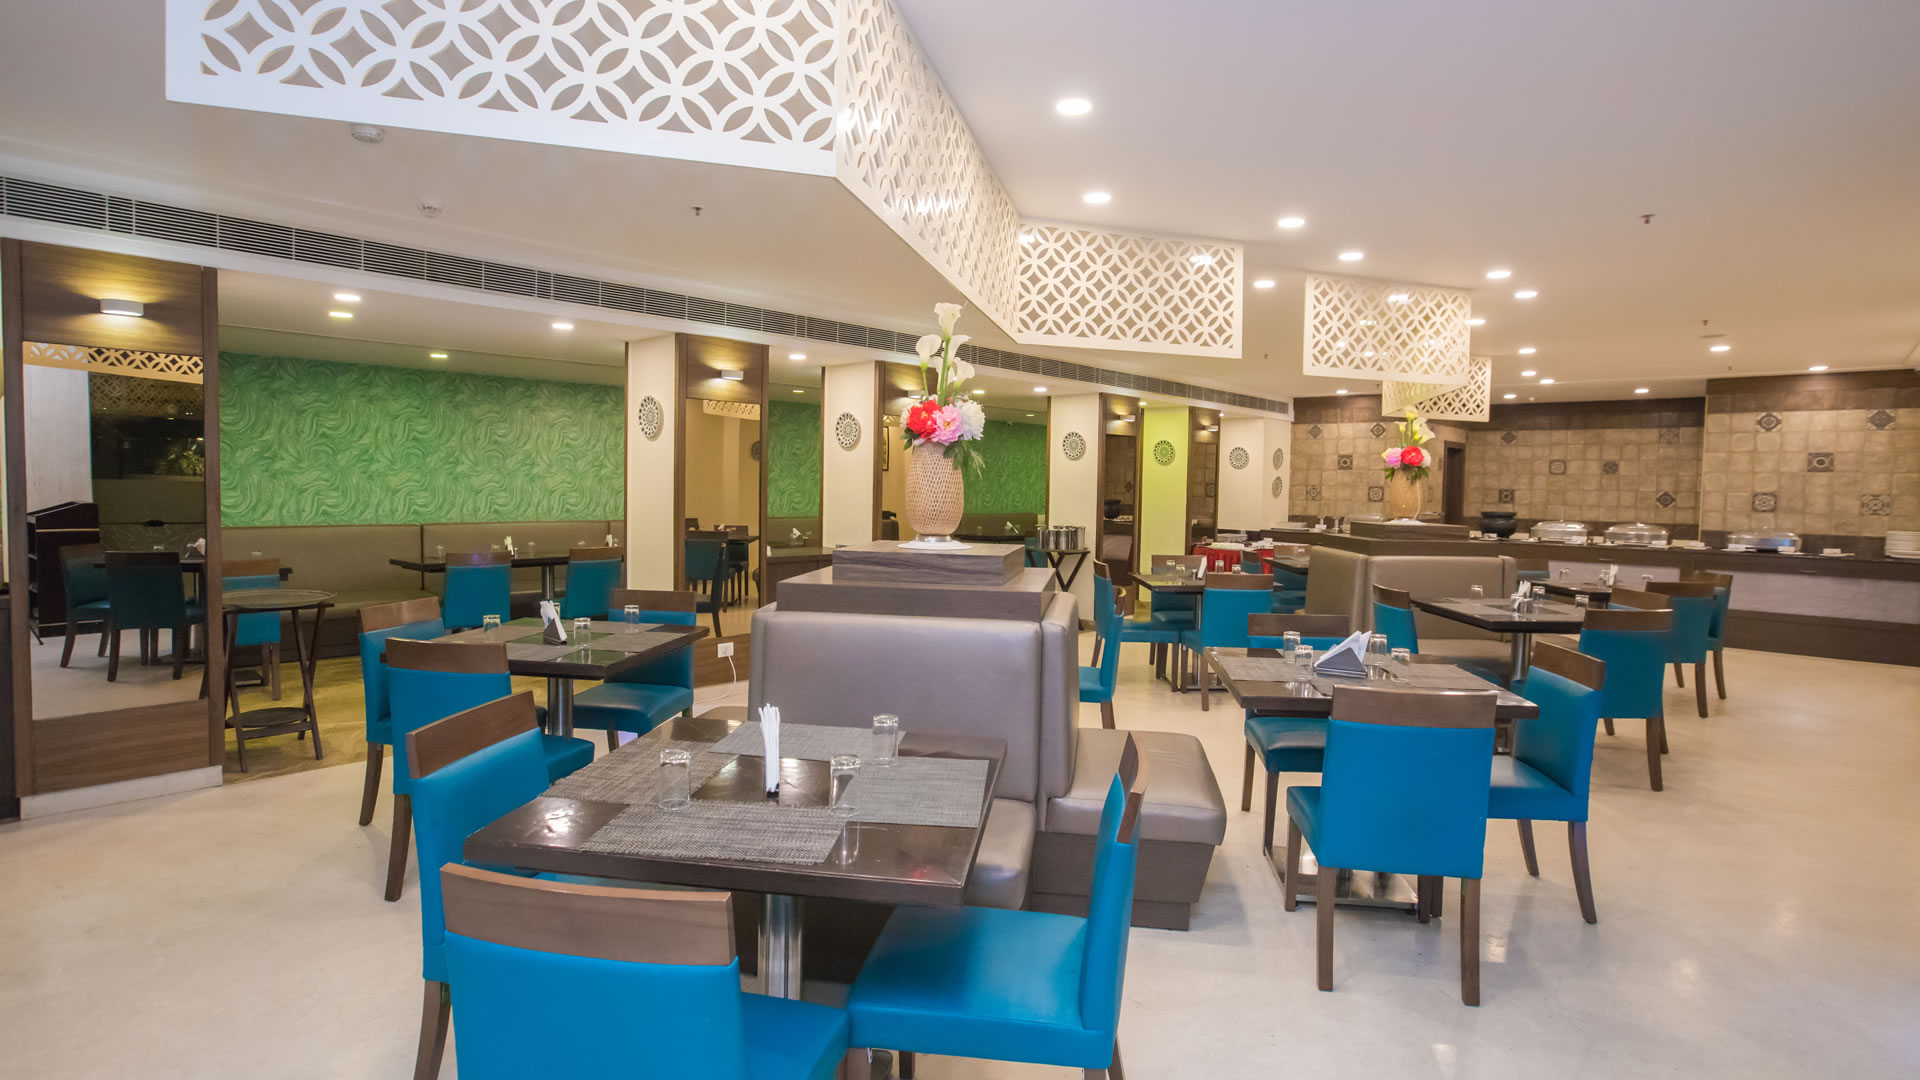 Best Veg hotel in Palani | Restaurant in Palani - Ganpat Grand,Palani ,Hotels & Resorts,Hotels,77traders